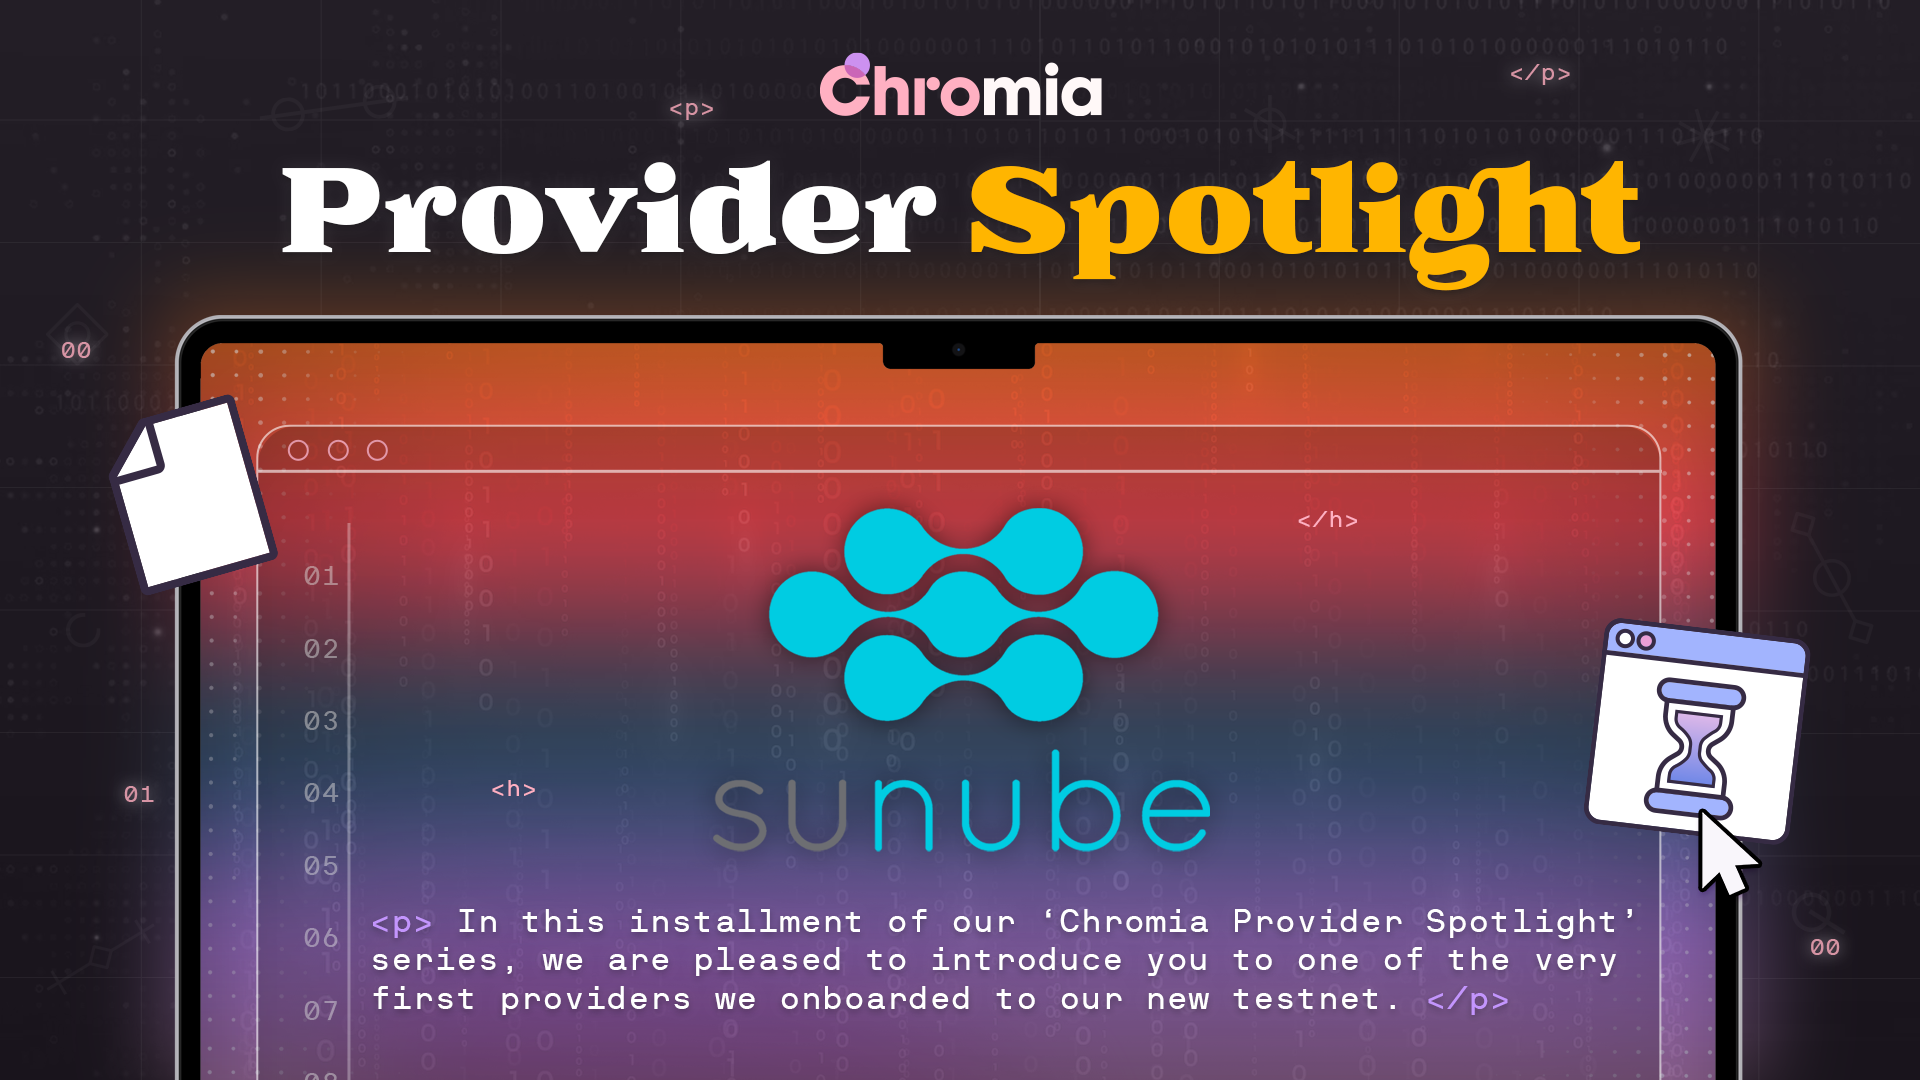 Chromia Provider Spotlight: Sunube